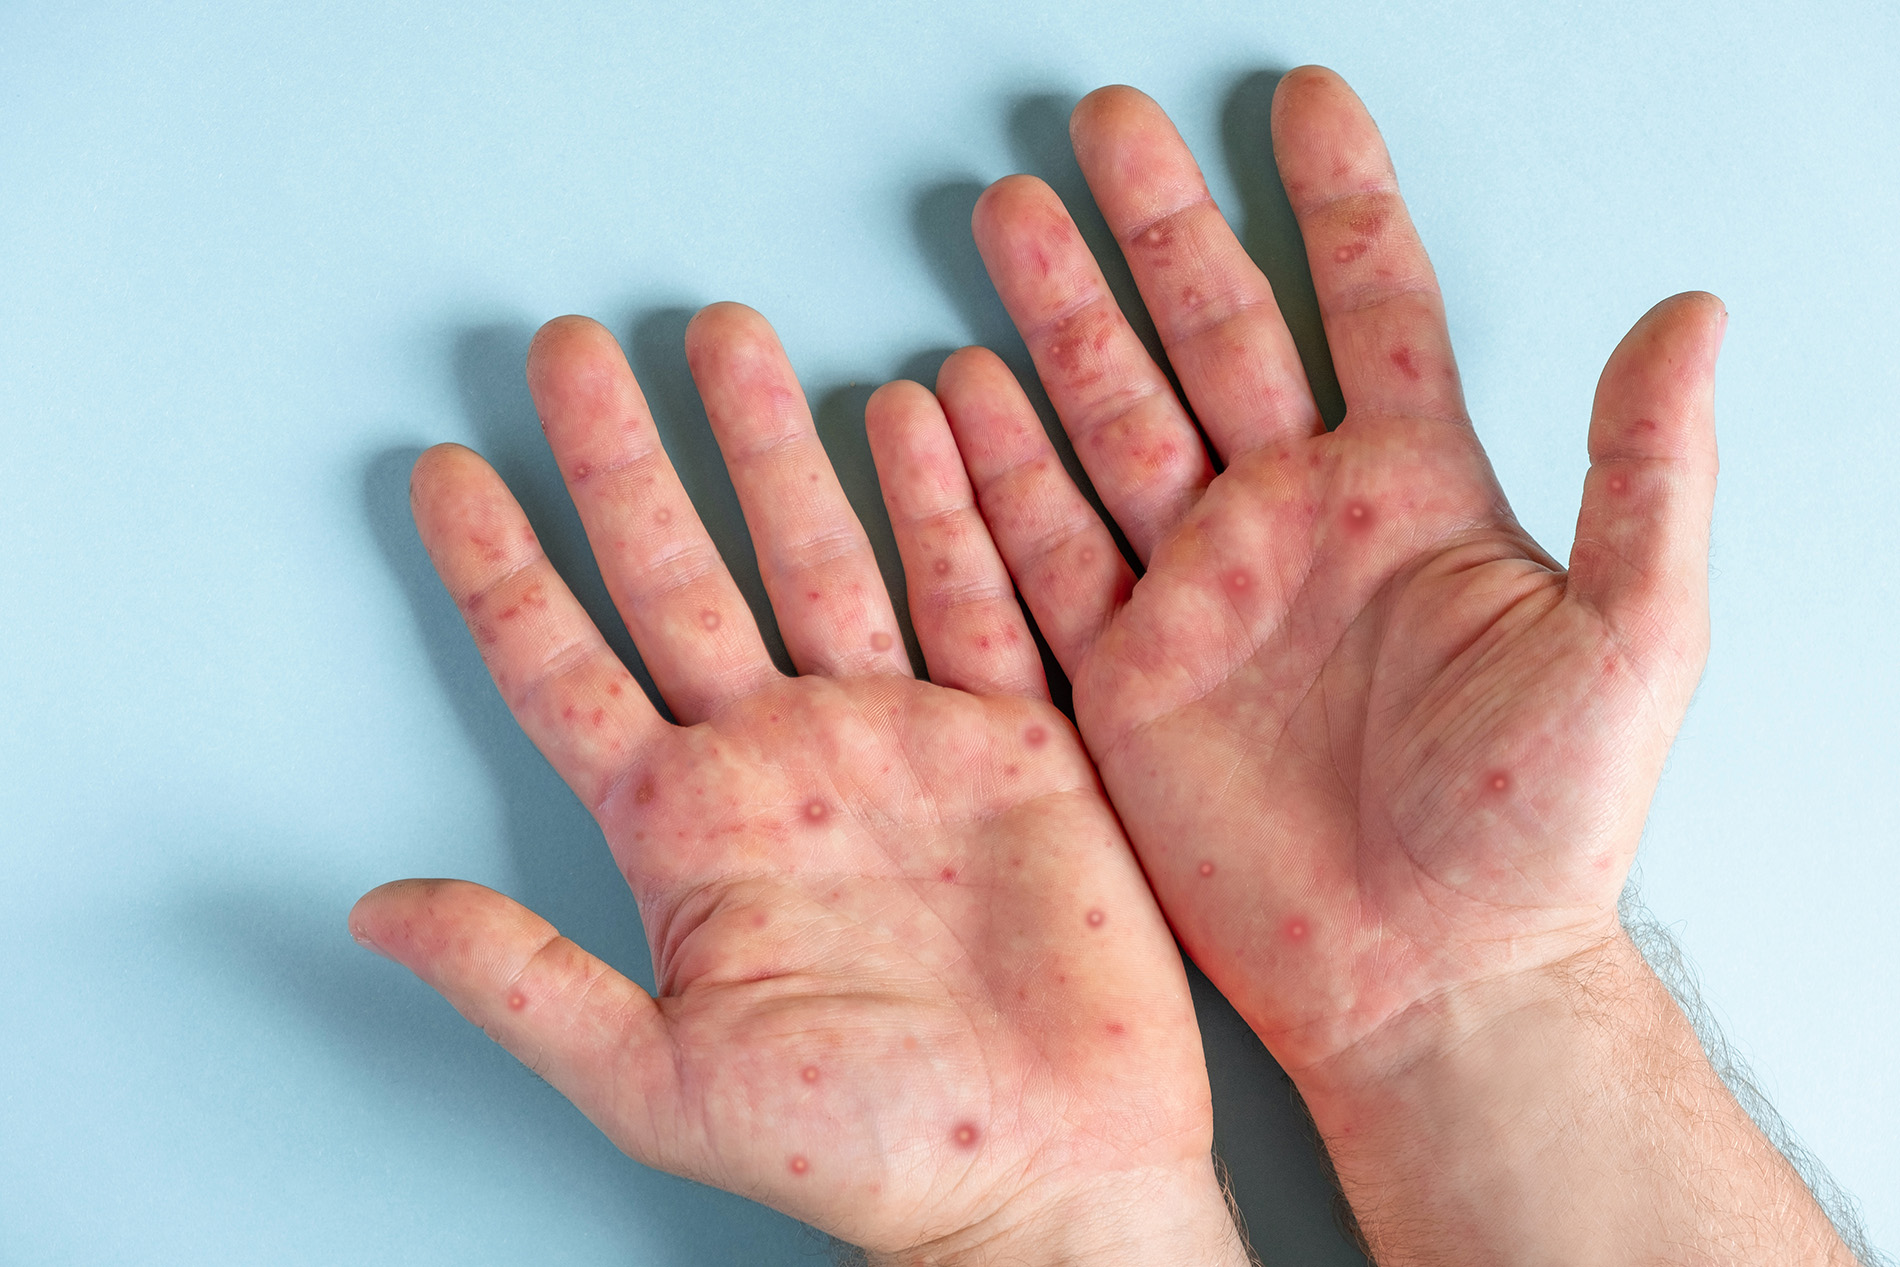 Man's hands with monkeypox rash